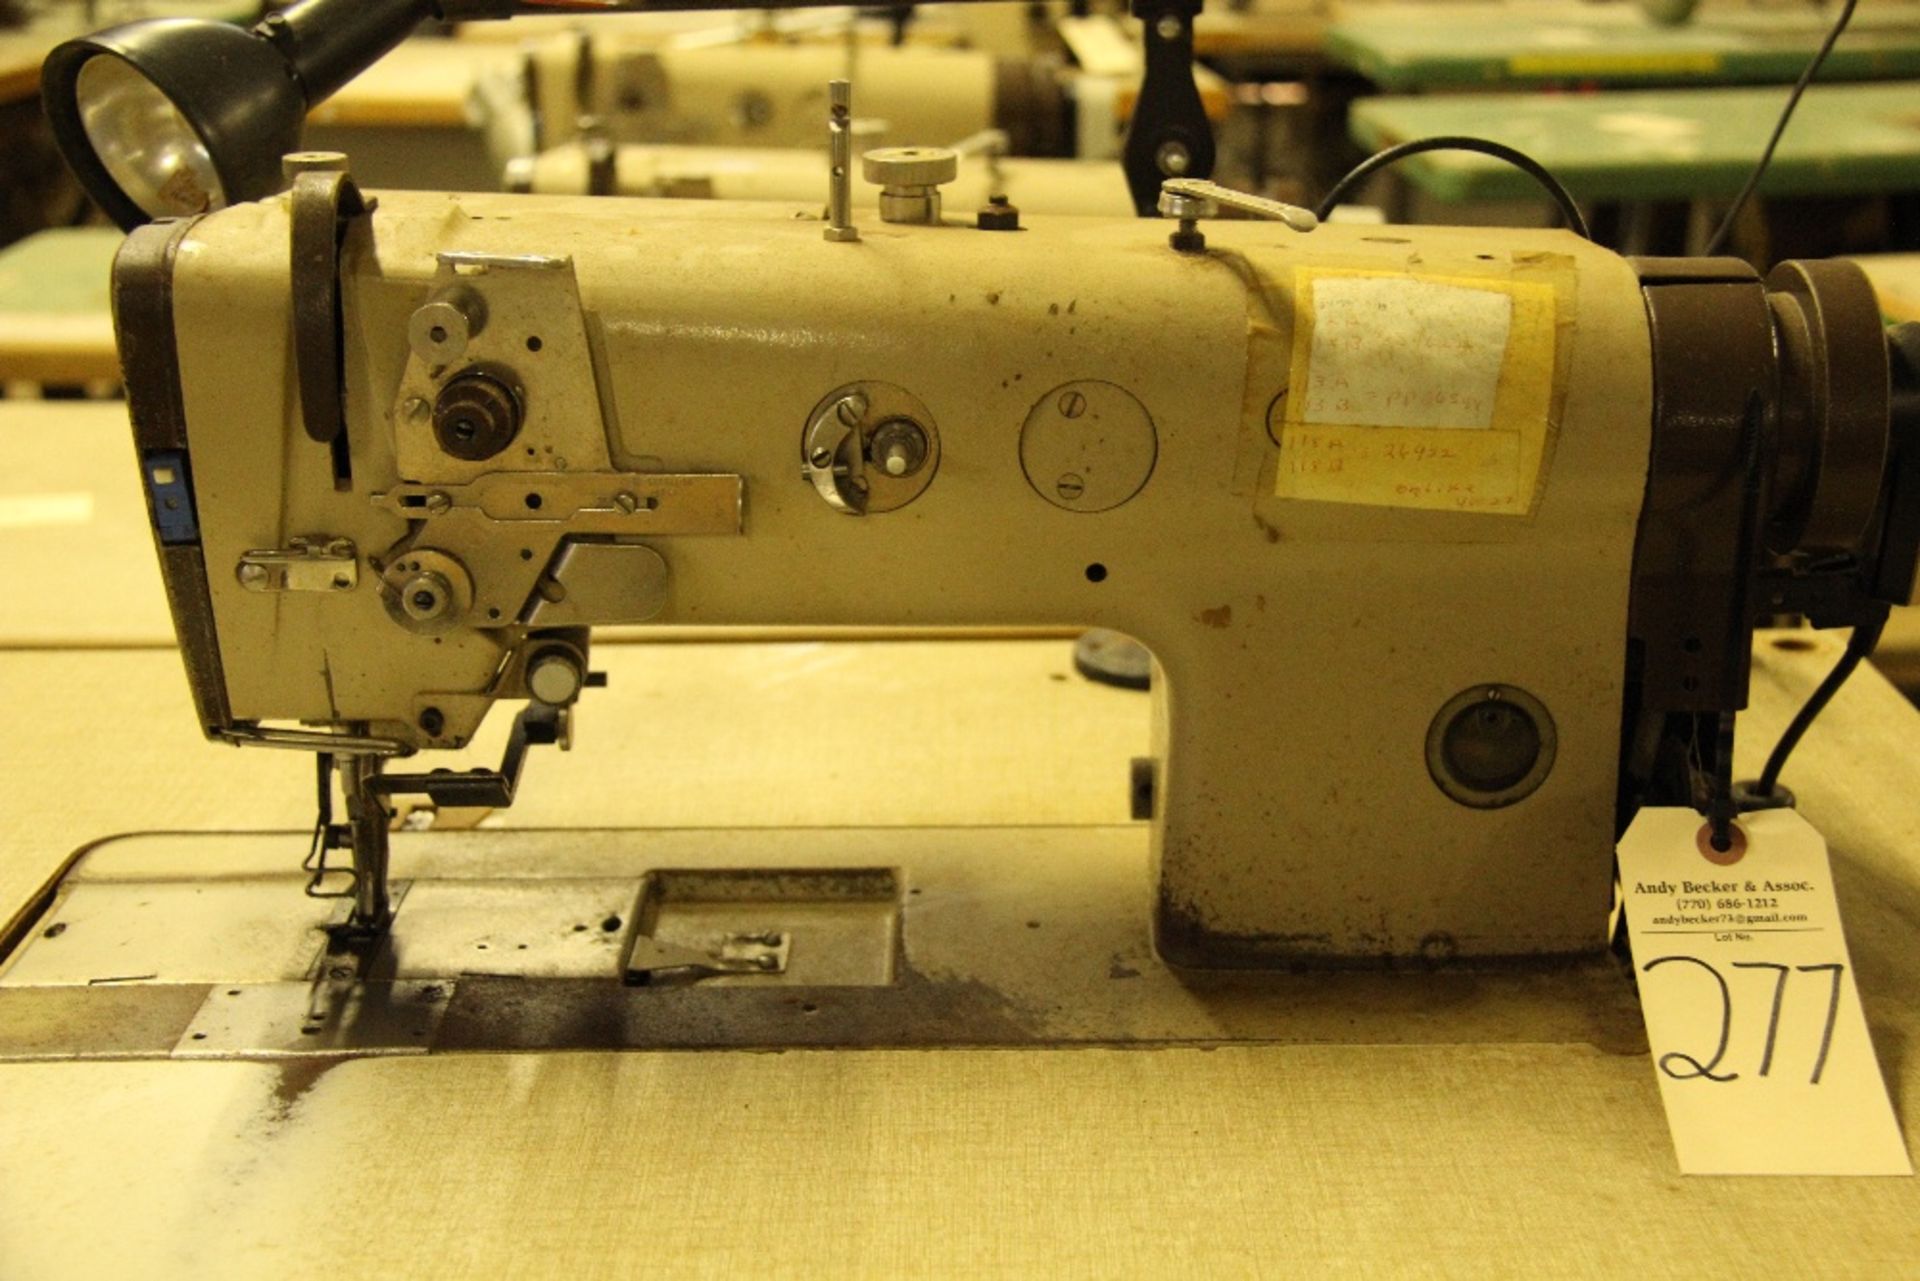 Pfaff 1445 Walking Foot Sewing Machine - Image 2 of 5